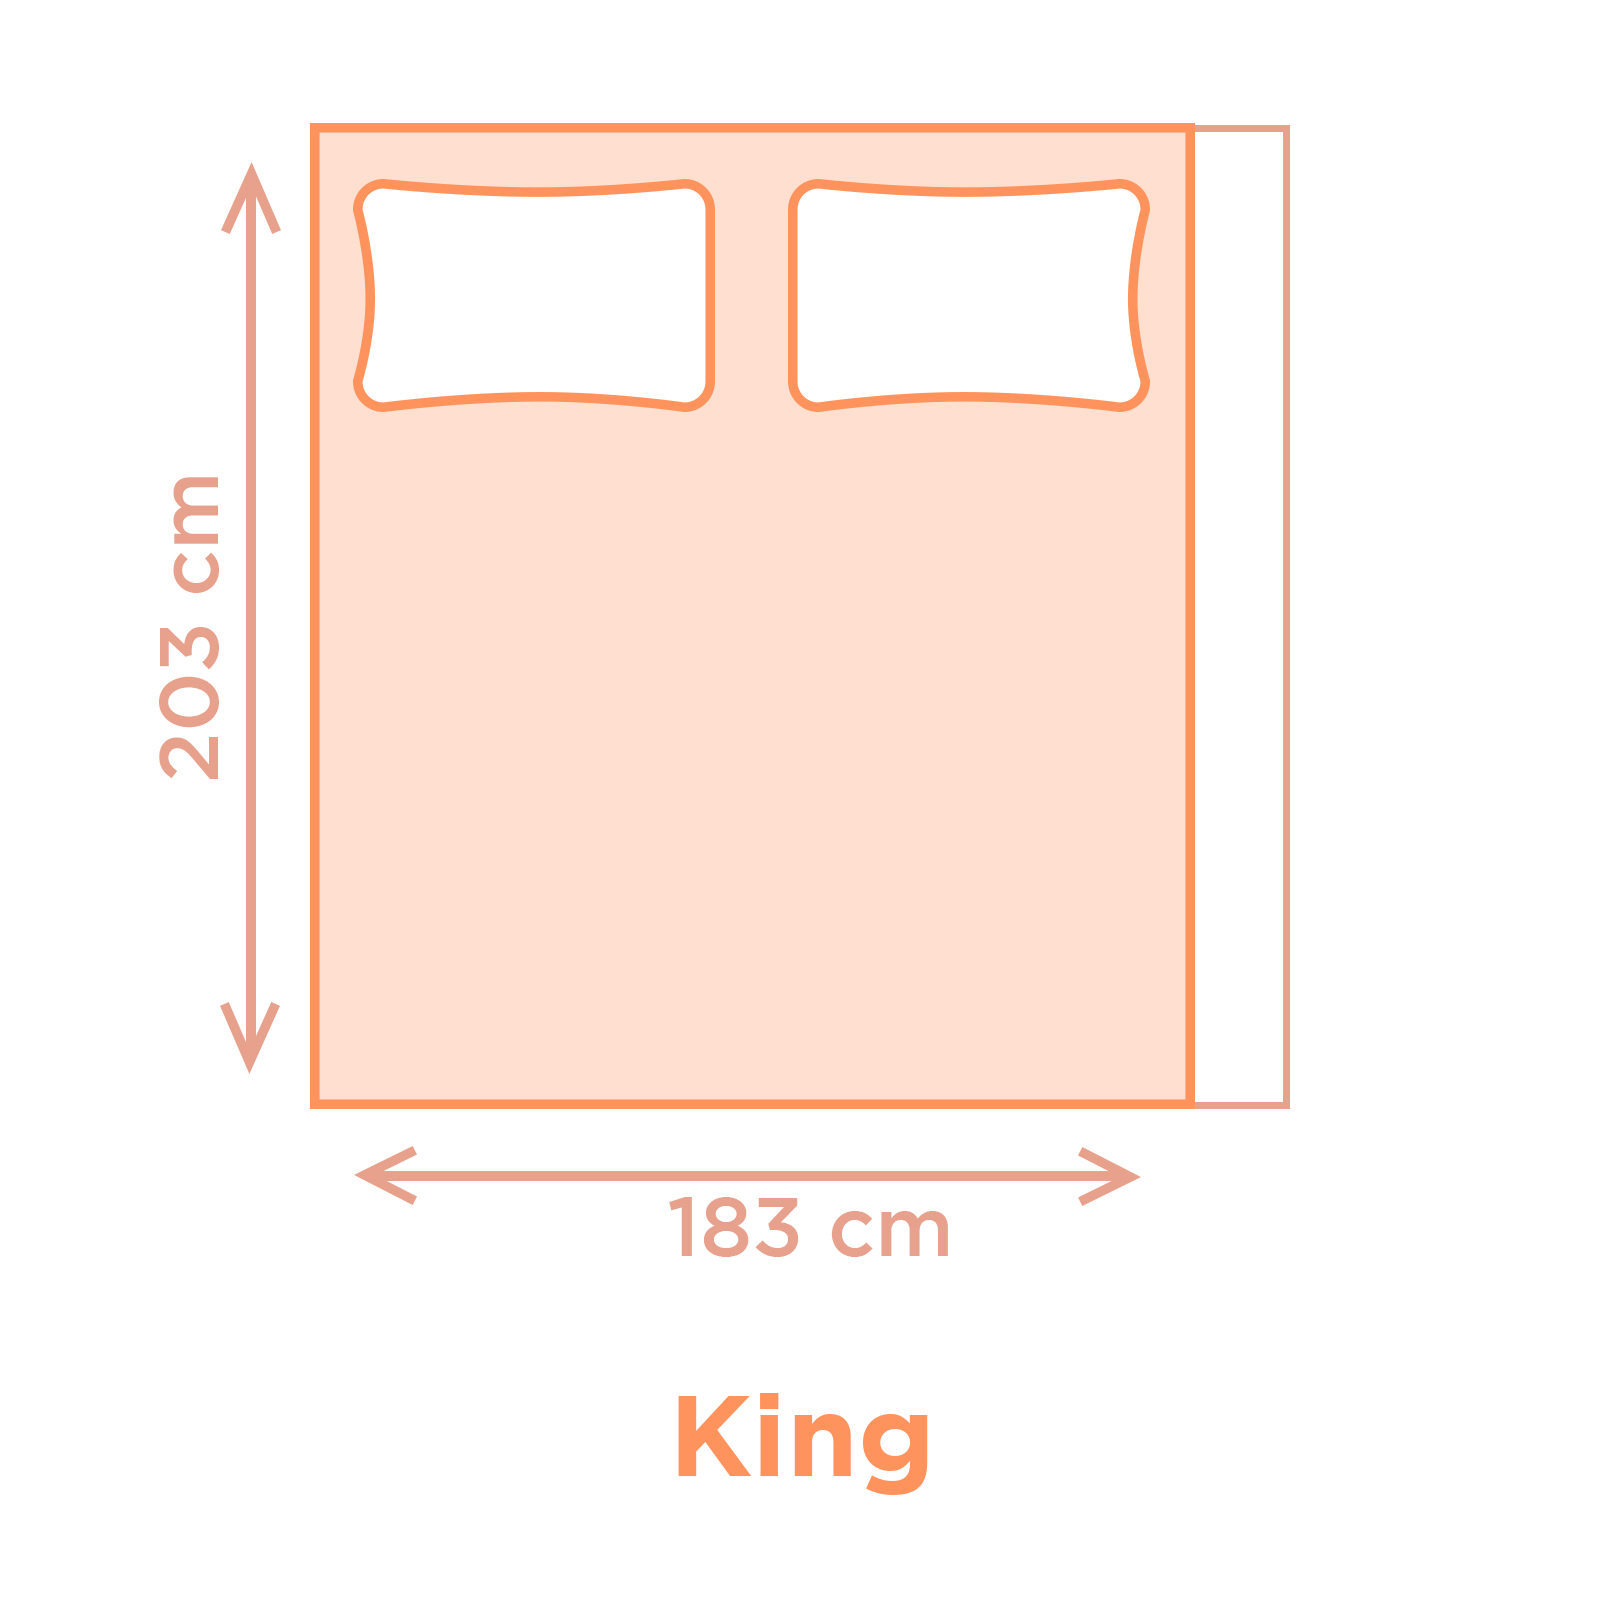 King Mattress Size & Dimensions in Australia